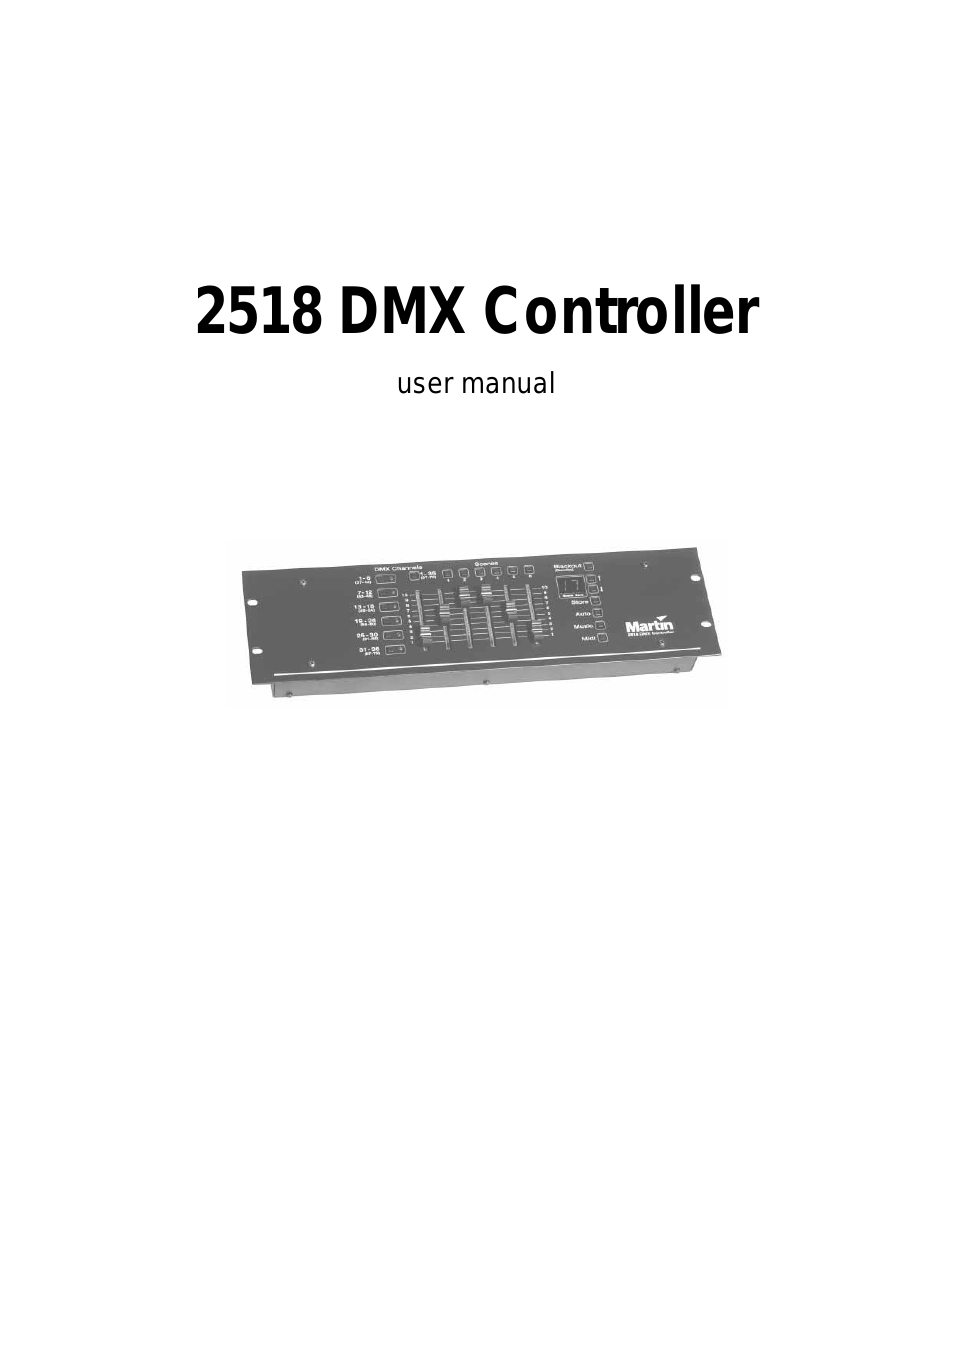 DMX Controller 2518